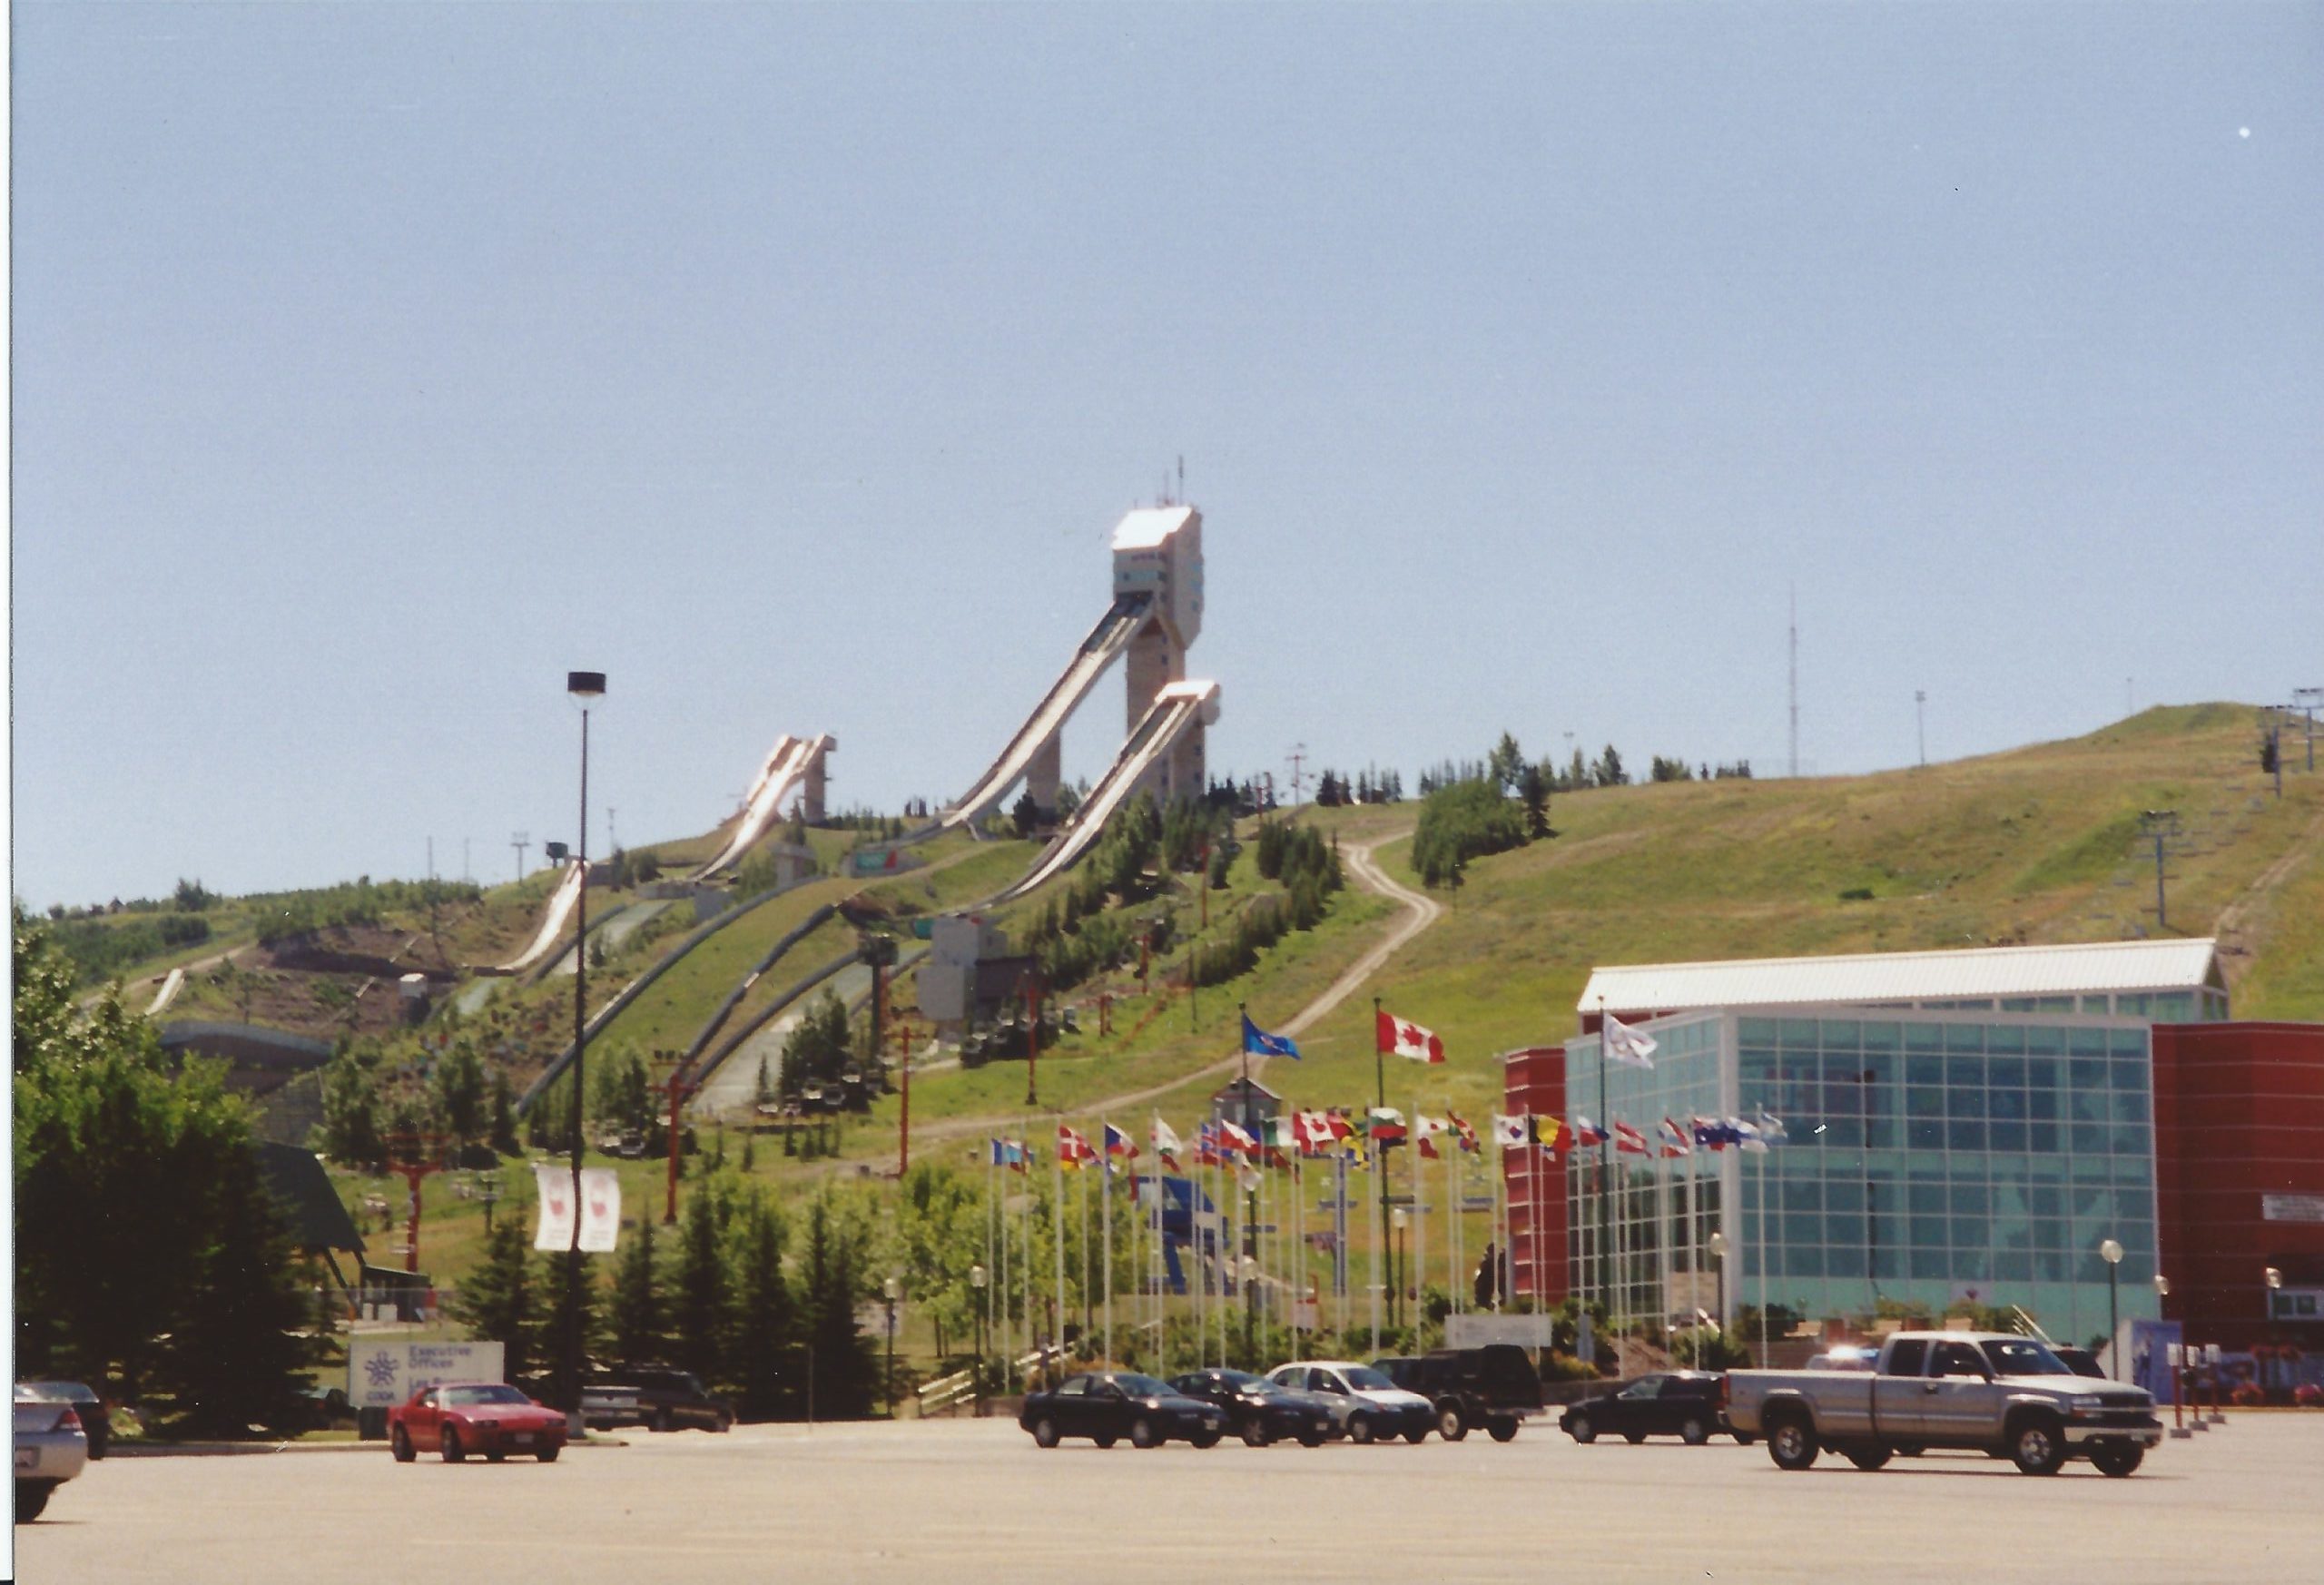 Olympic Ski Jump